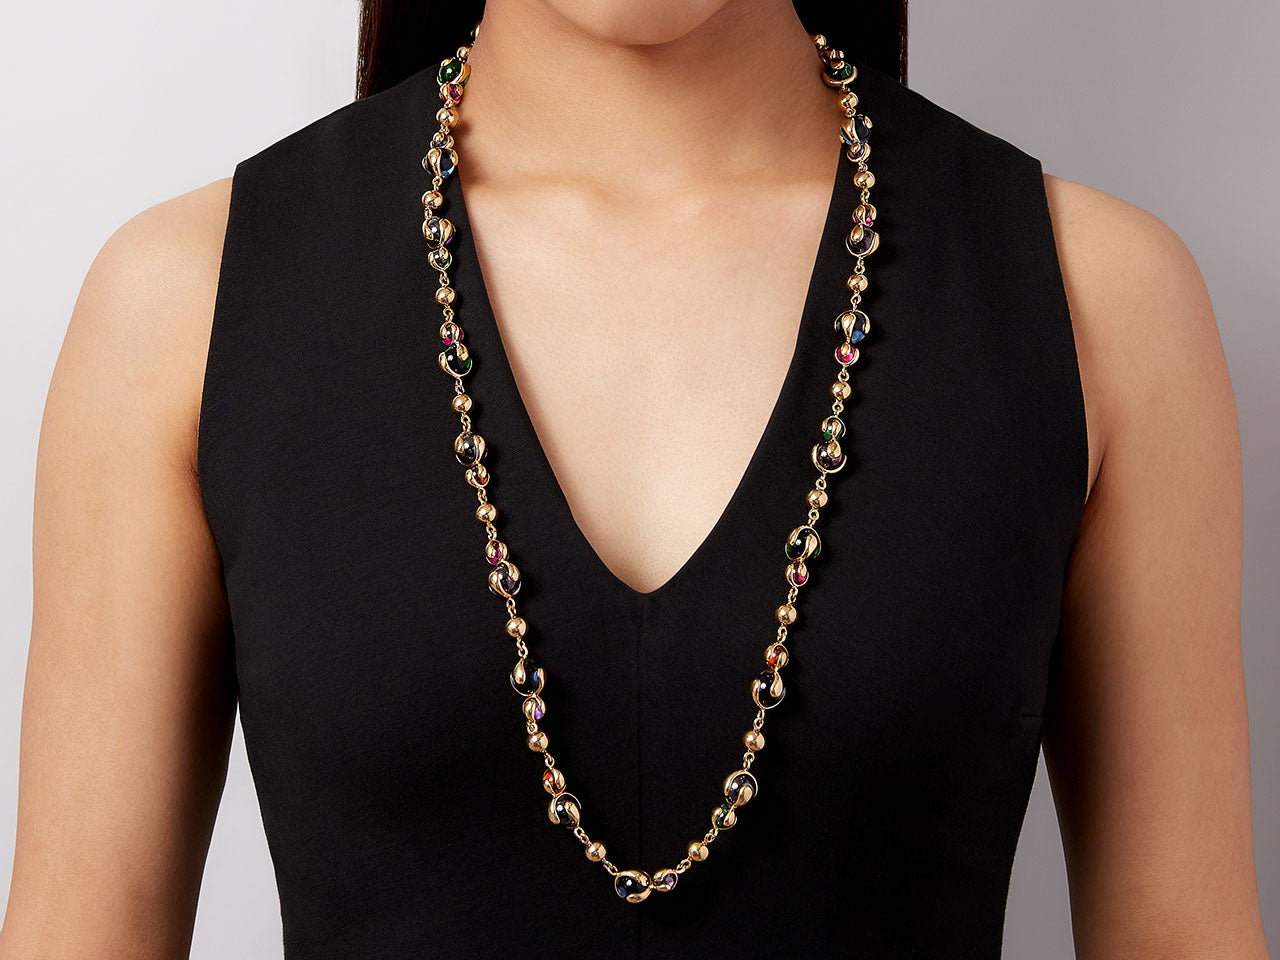 Marina B 'Cardan' Gemstone Necklace in 18K Gold